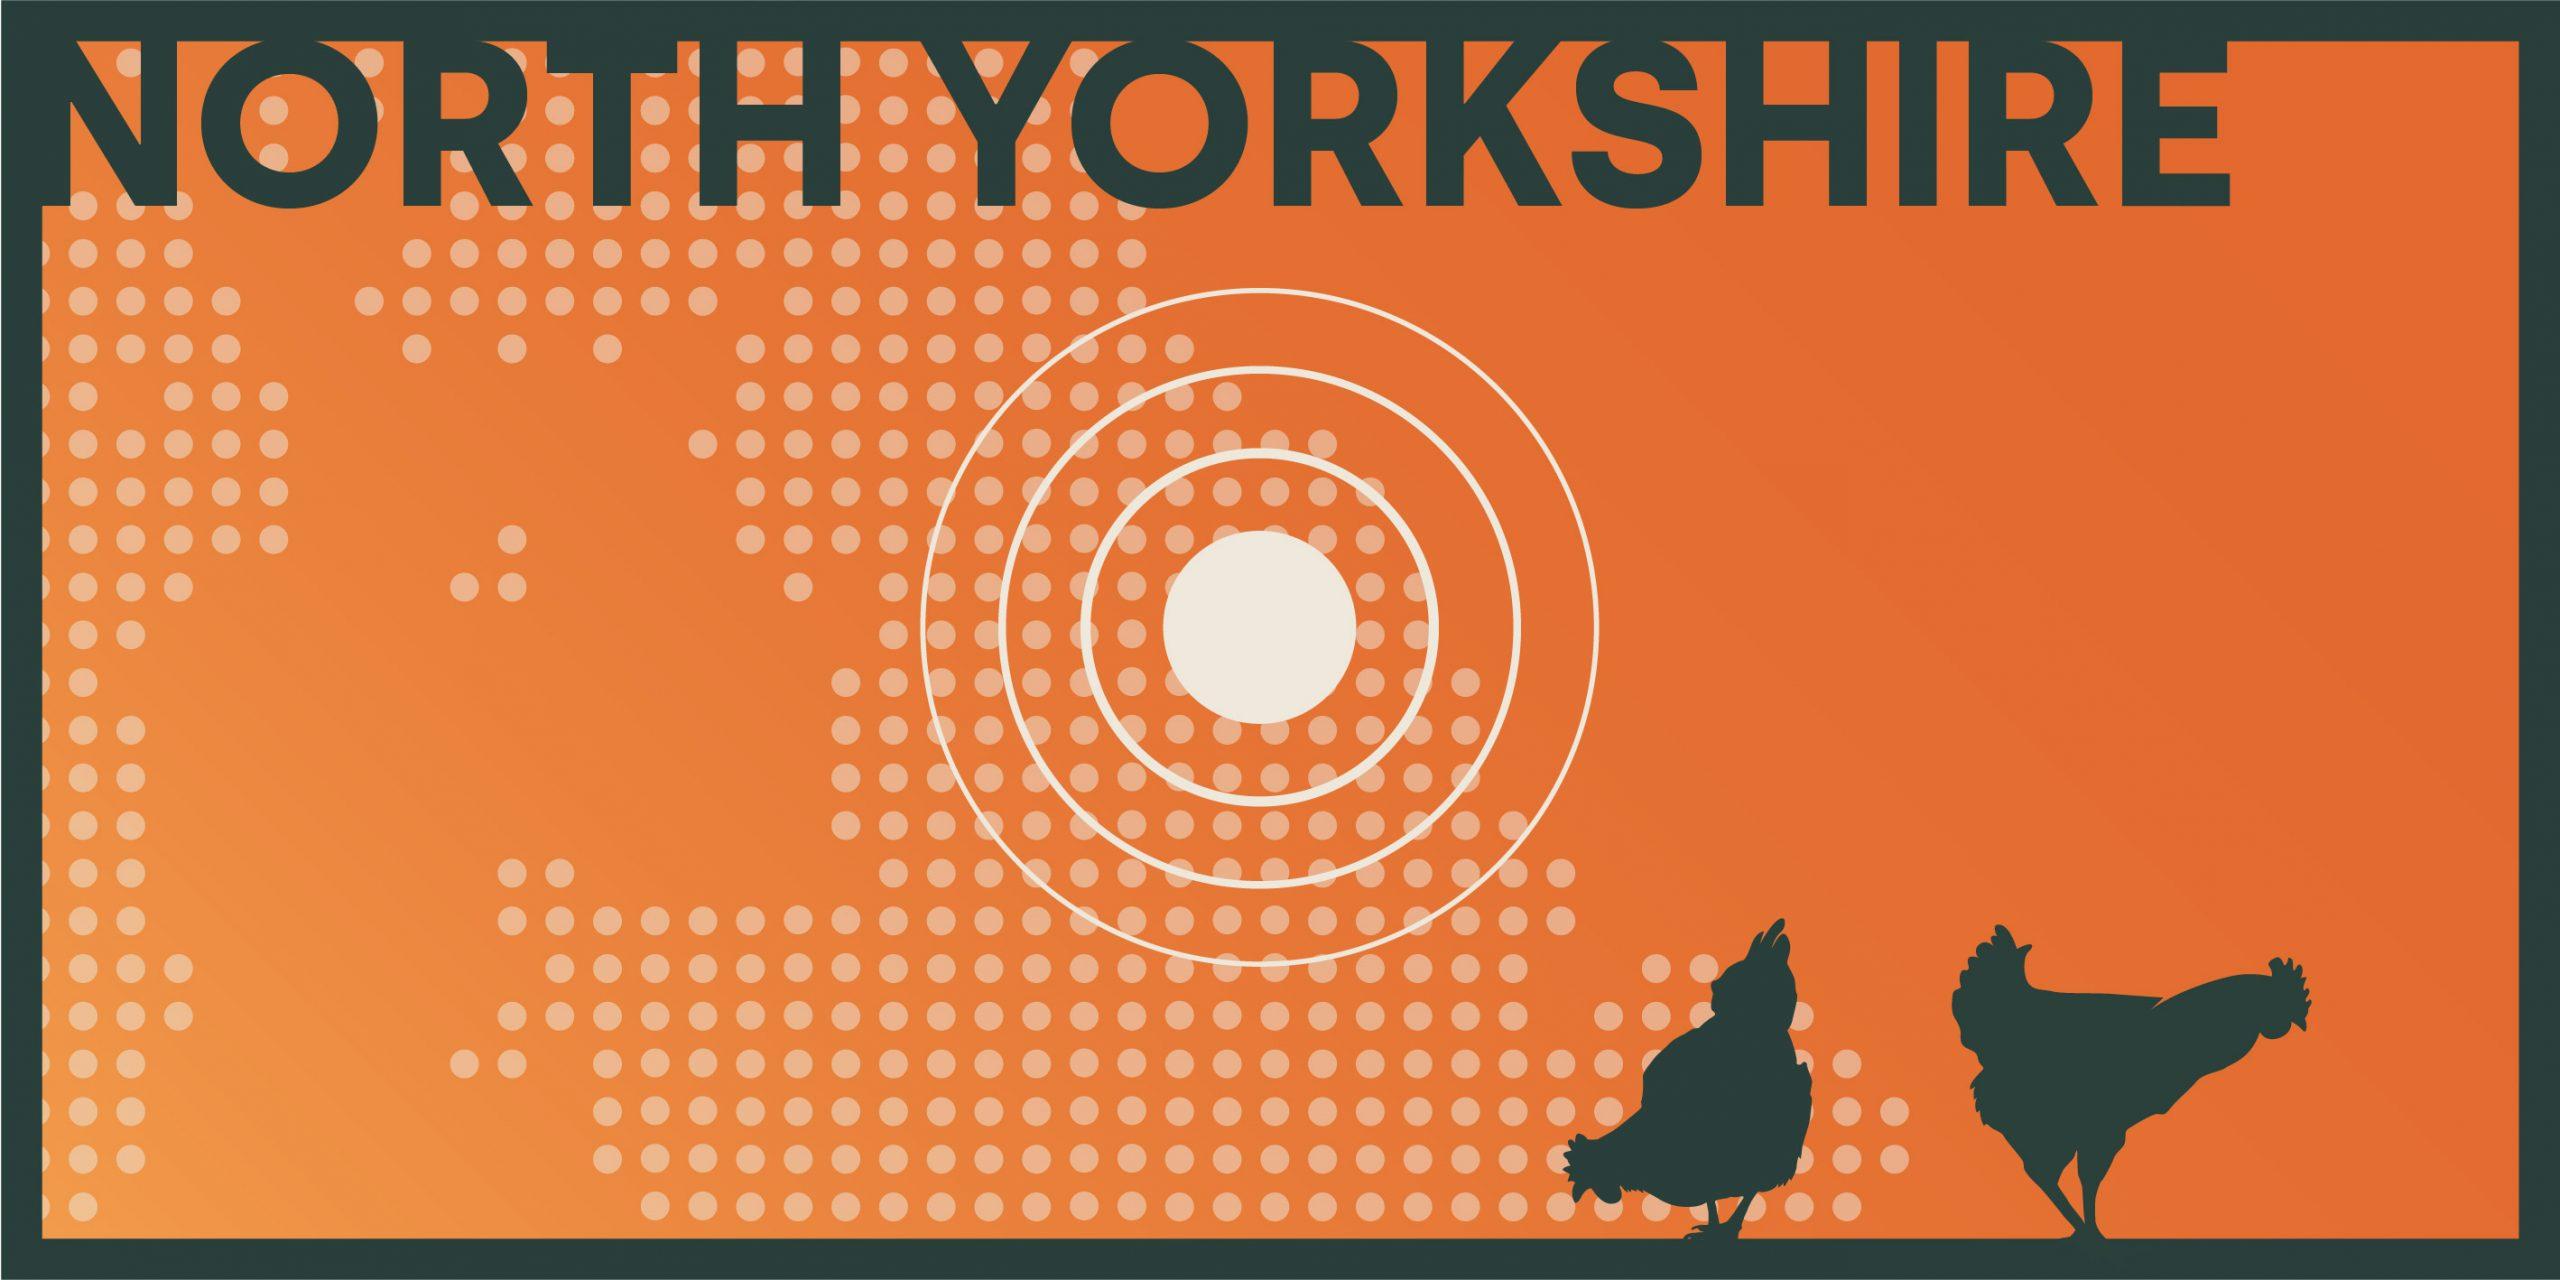 Salmonella T outbreak in North Yorkshire blog post graphic